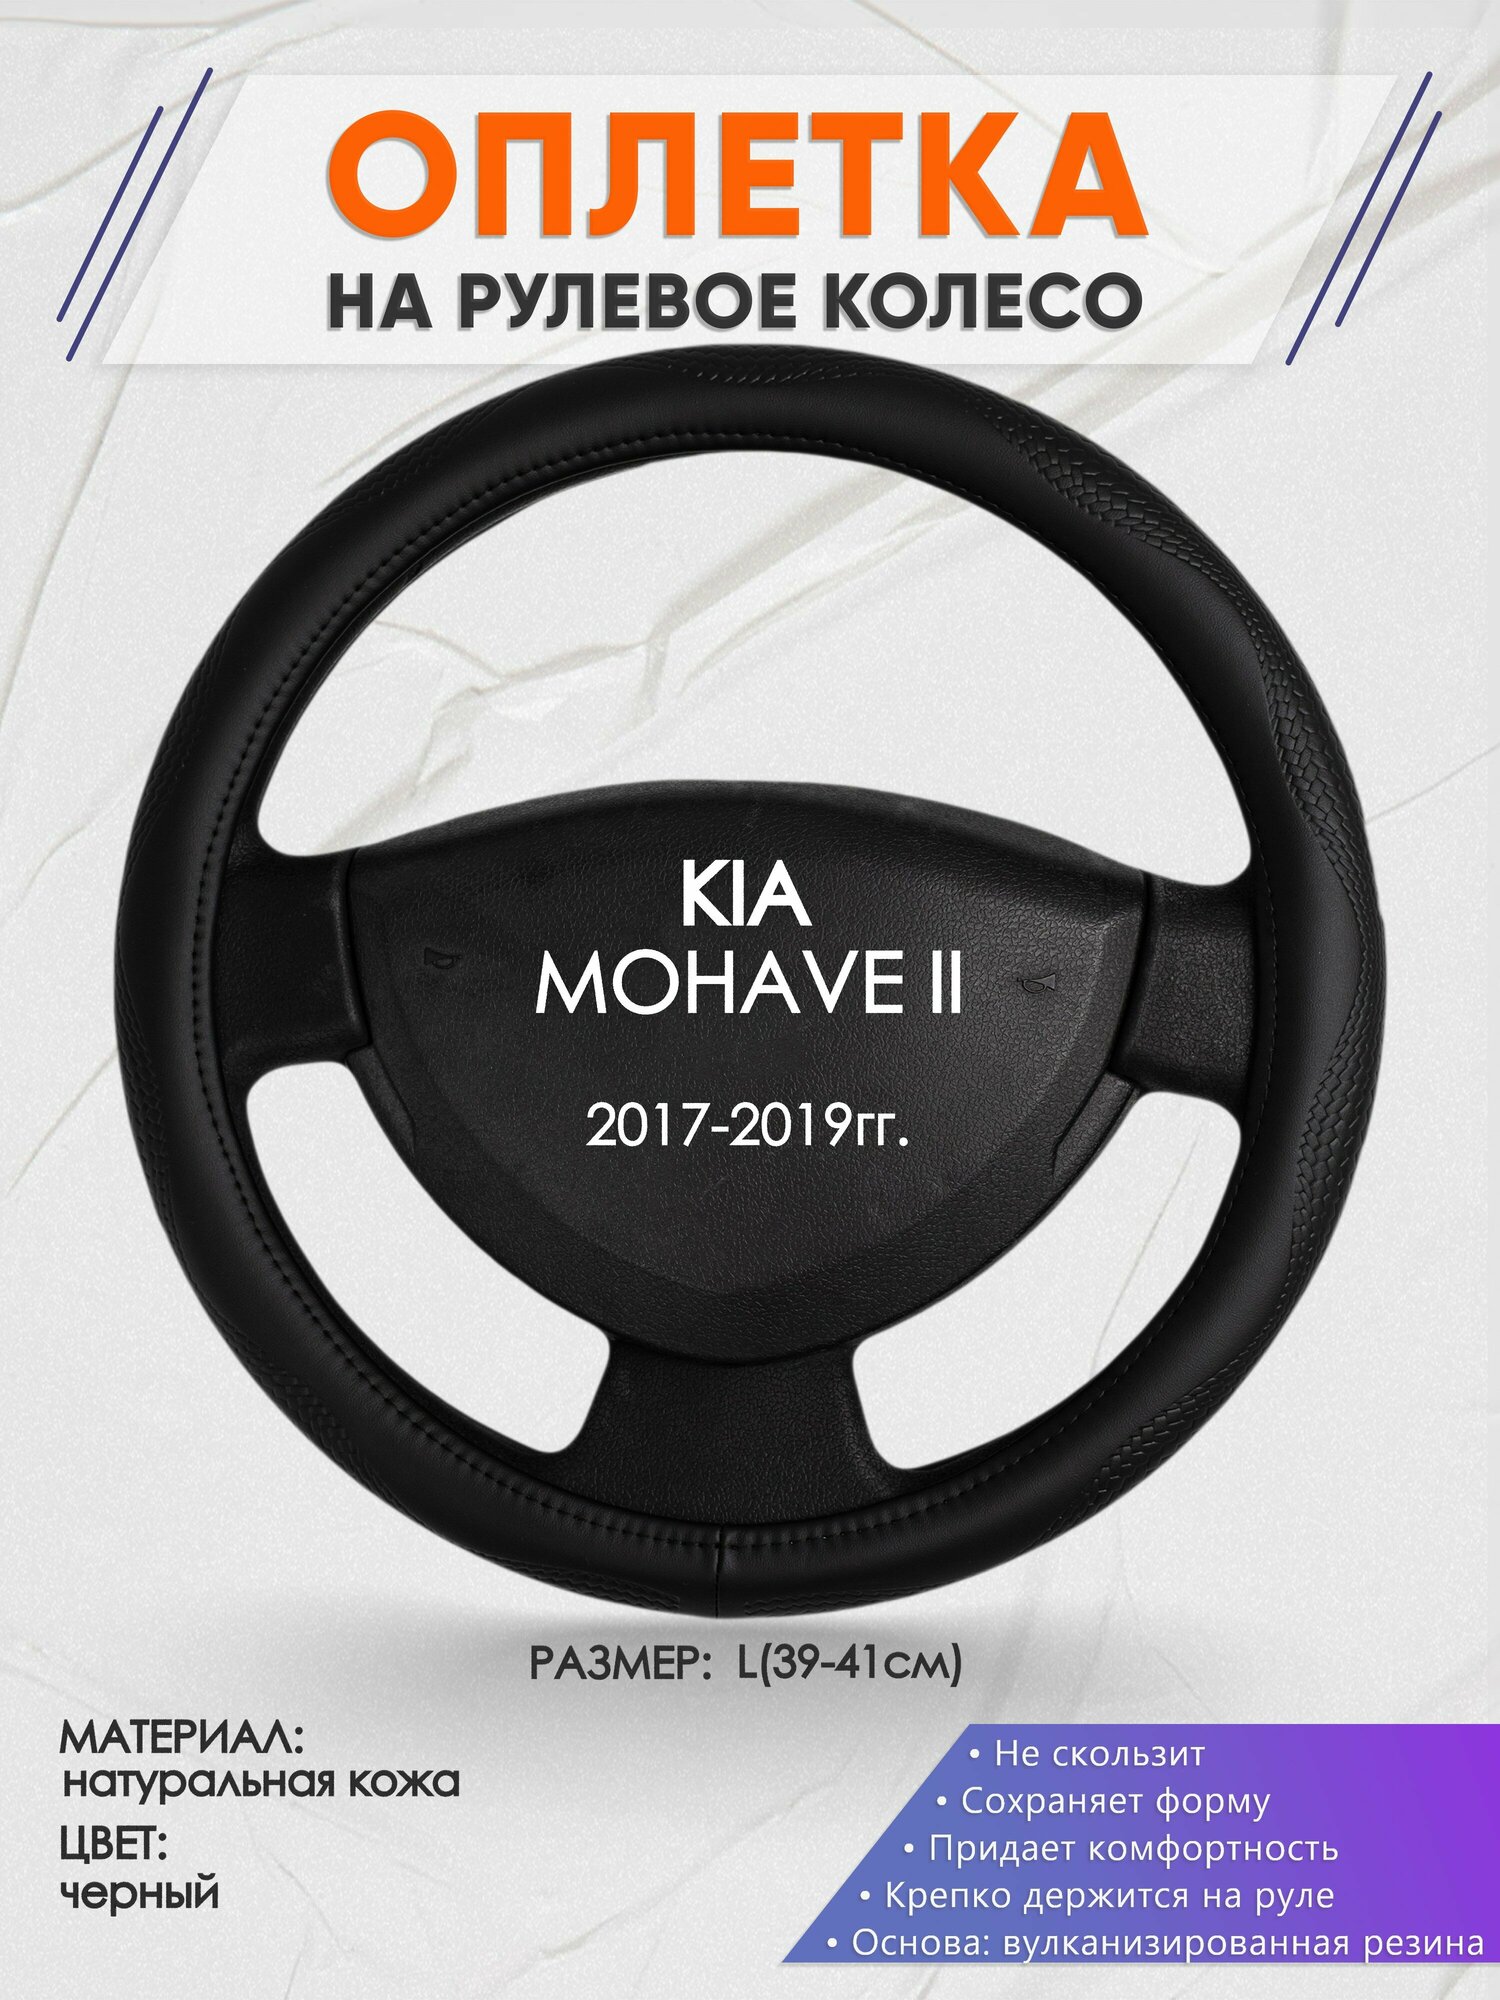 Оплетка на руль для KIA MOHAVE 2(Киа Мохаве) 2017-2019, L(39-41см), Натуральная кожа 32